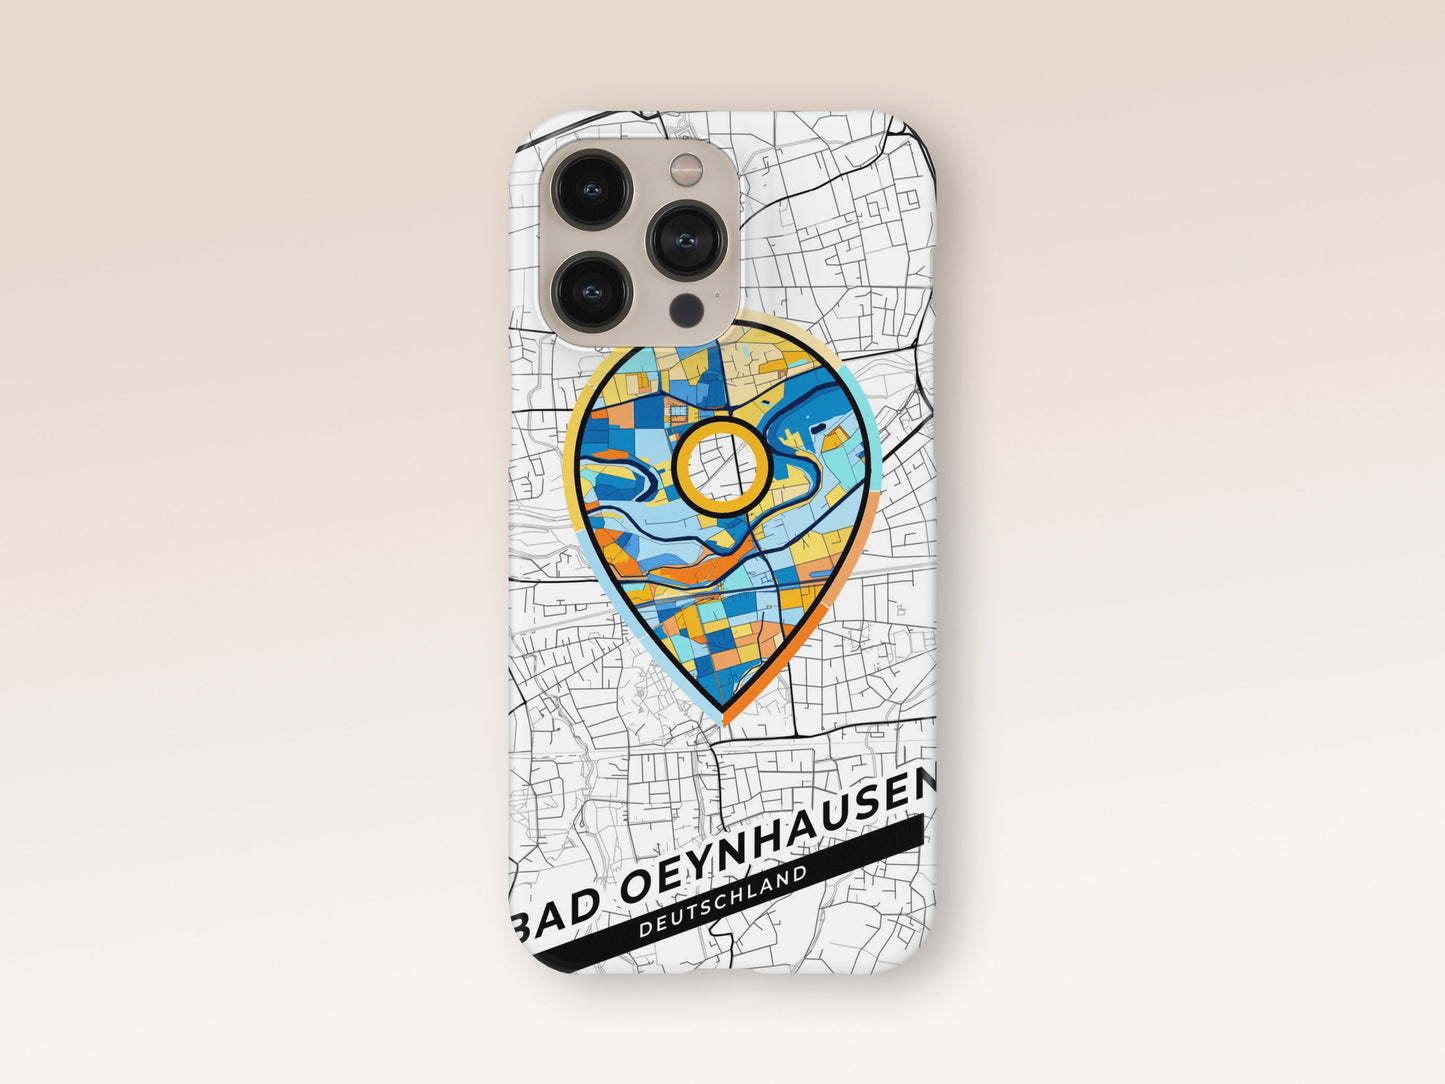 Bad Oeynhausen Deutschland slim phone case with colorful icon. Birthday, wedding or housewarming gift. Couple match cases. 1